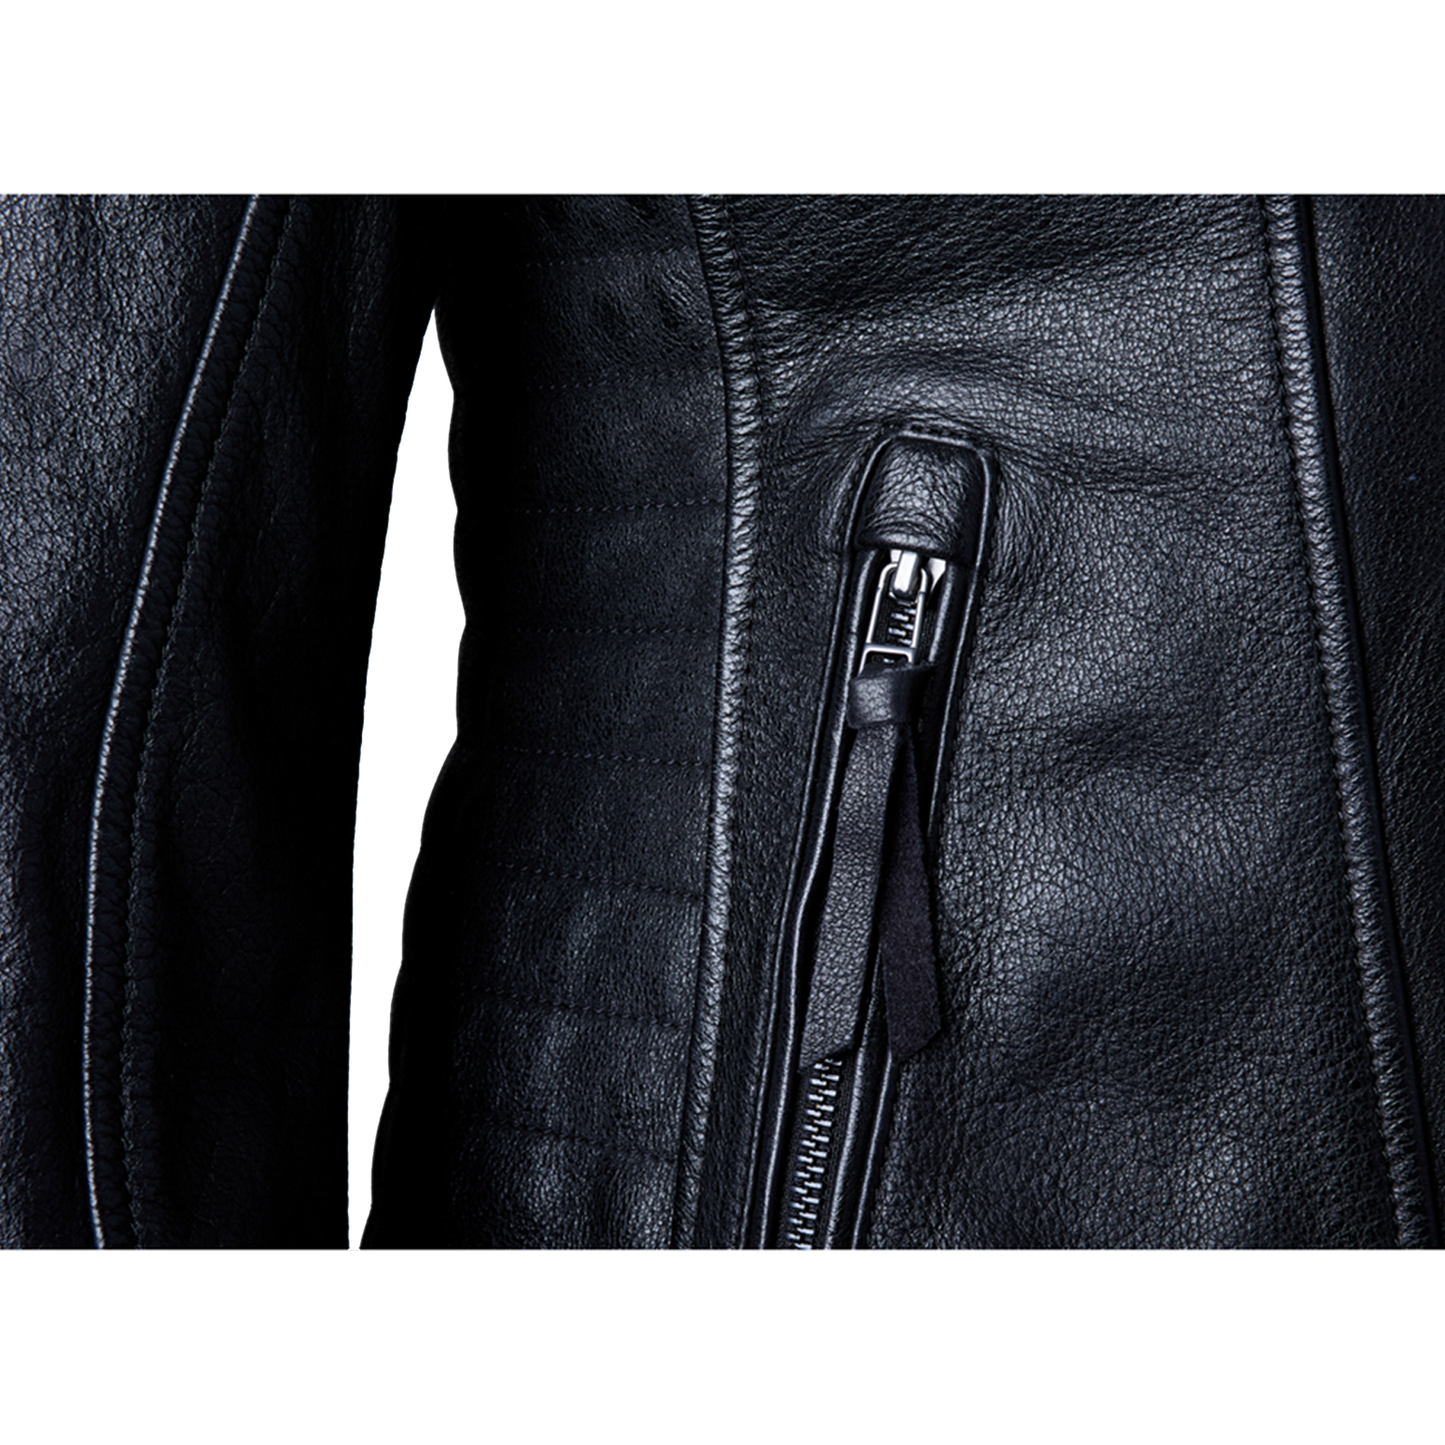 RST Ripley 2 (CE) Ladies Leather Jacket - Black